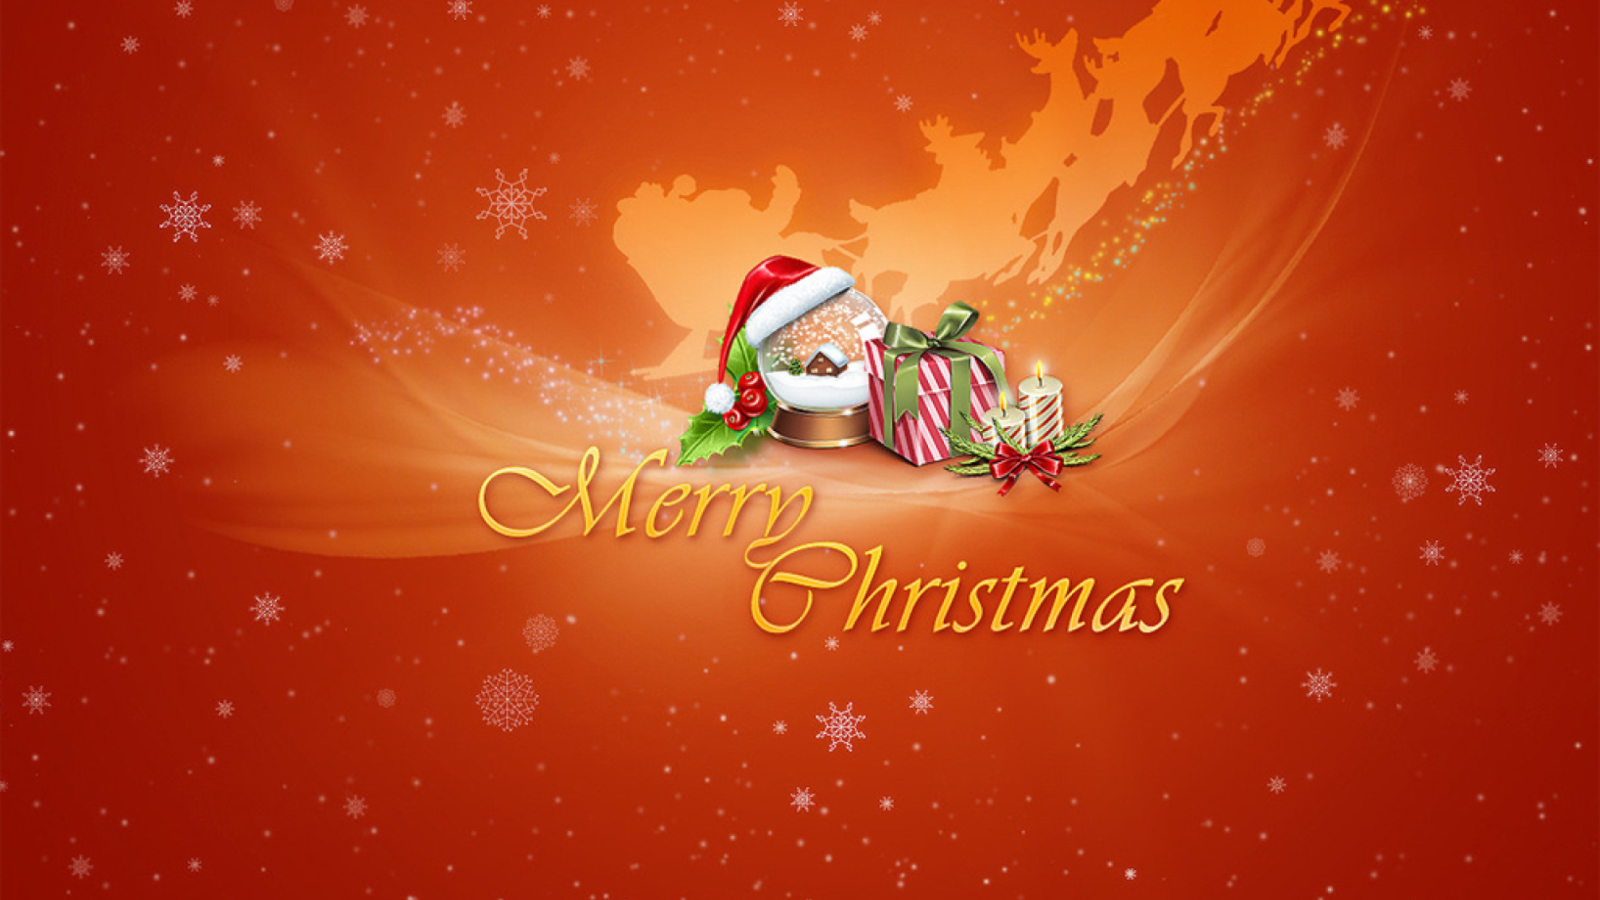 Merry Christmas wallpaper 1600x900